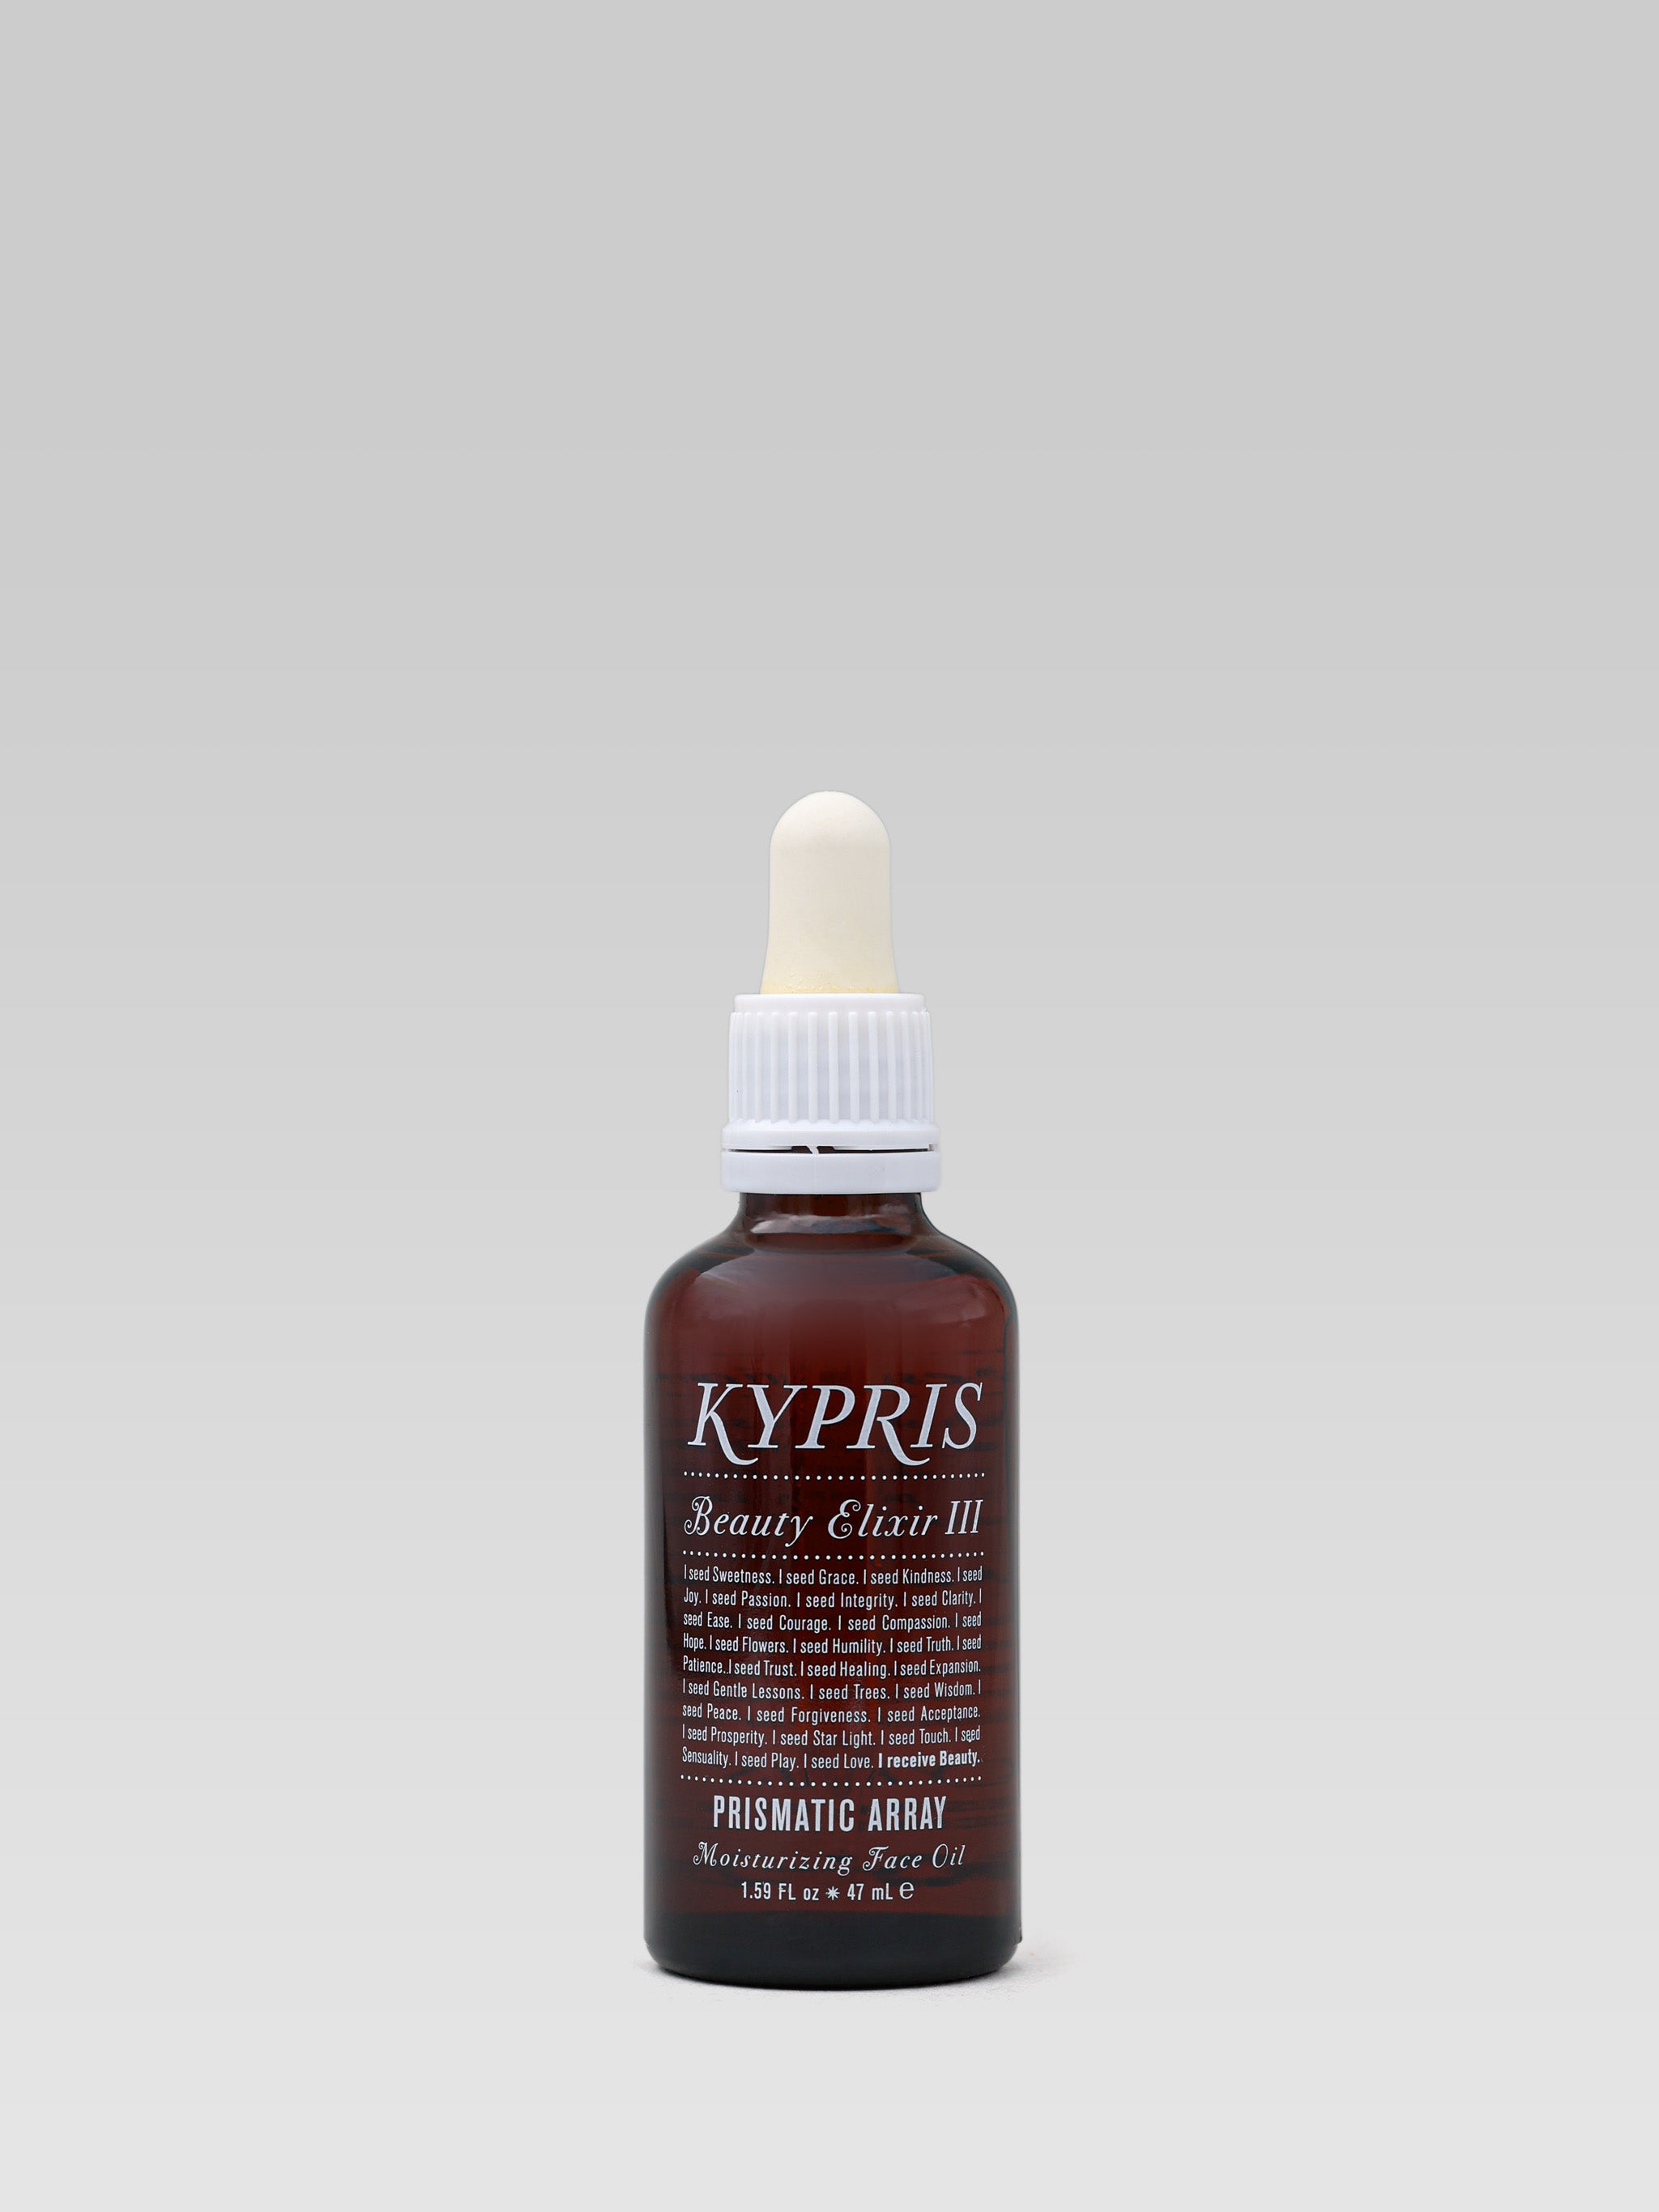 Kypris Beauty Elixir III Prismatic Array product shot 